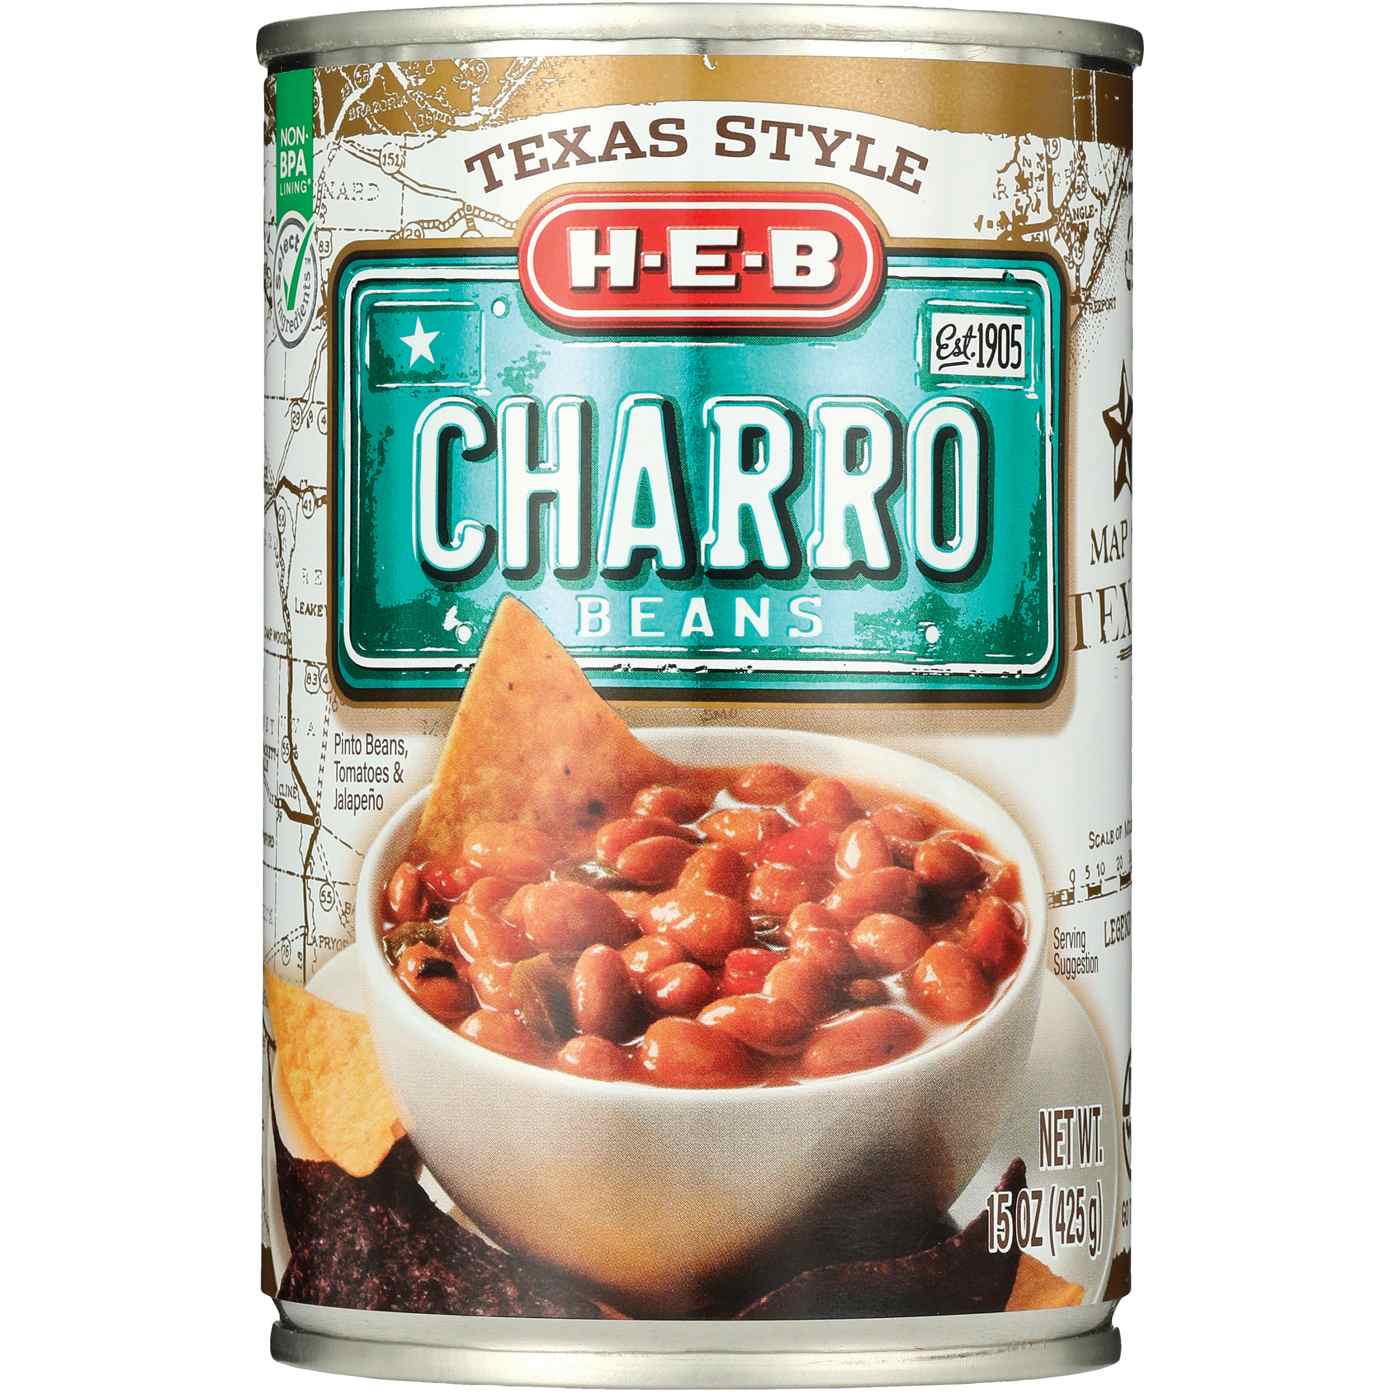 H-E-B Texas Style Charro Beans; image 2 of 2